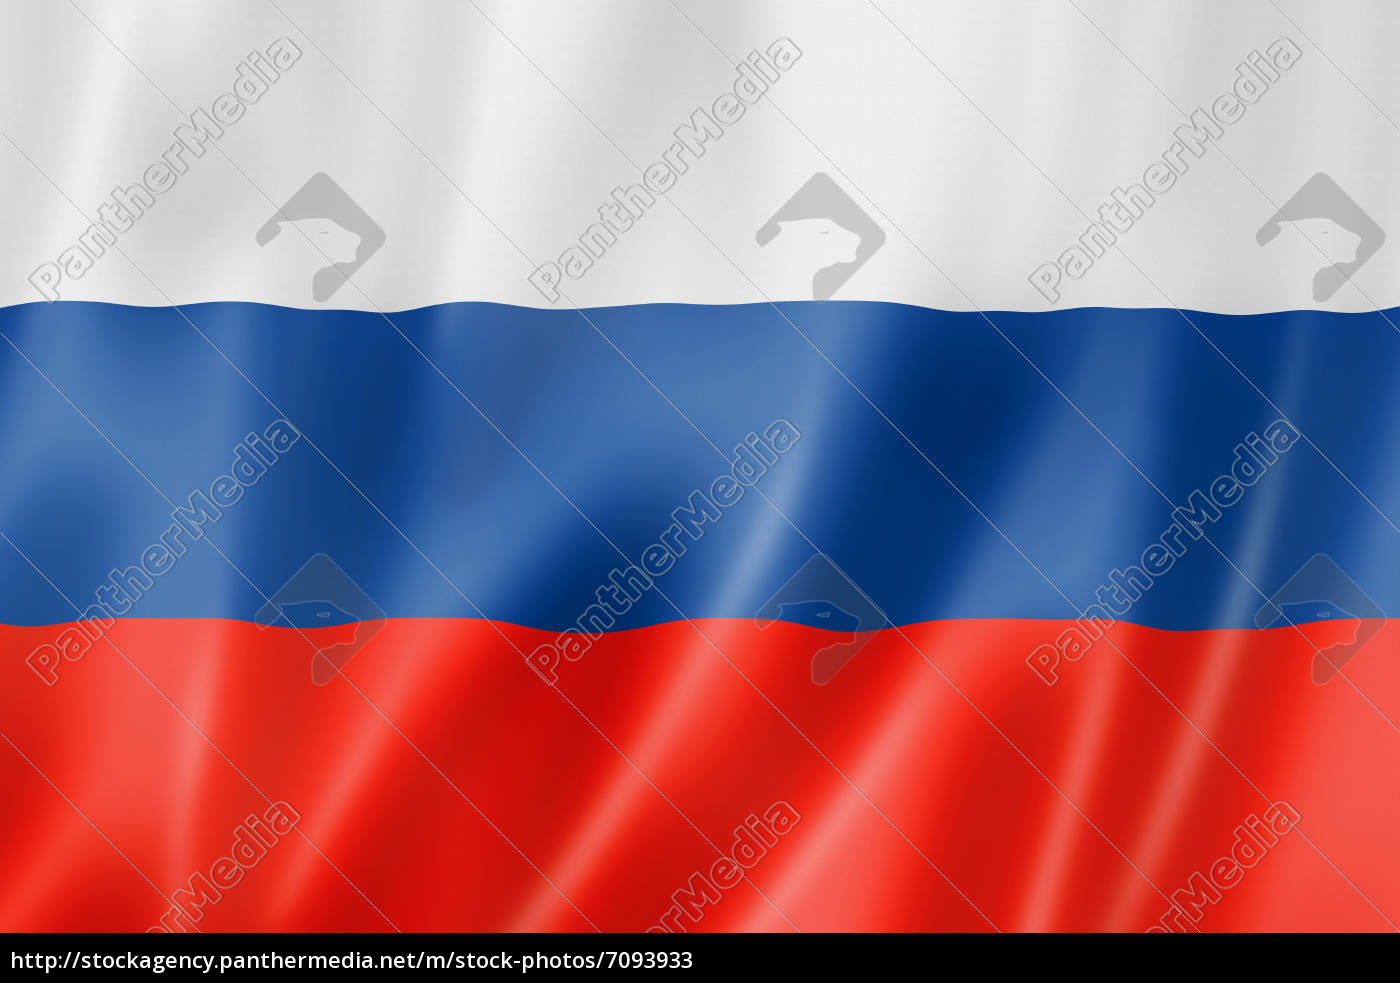 6.126 fotos de stock e banco de imagens de Bandeira Russa - Getty